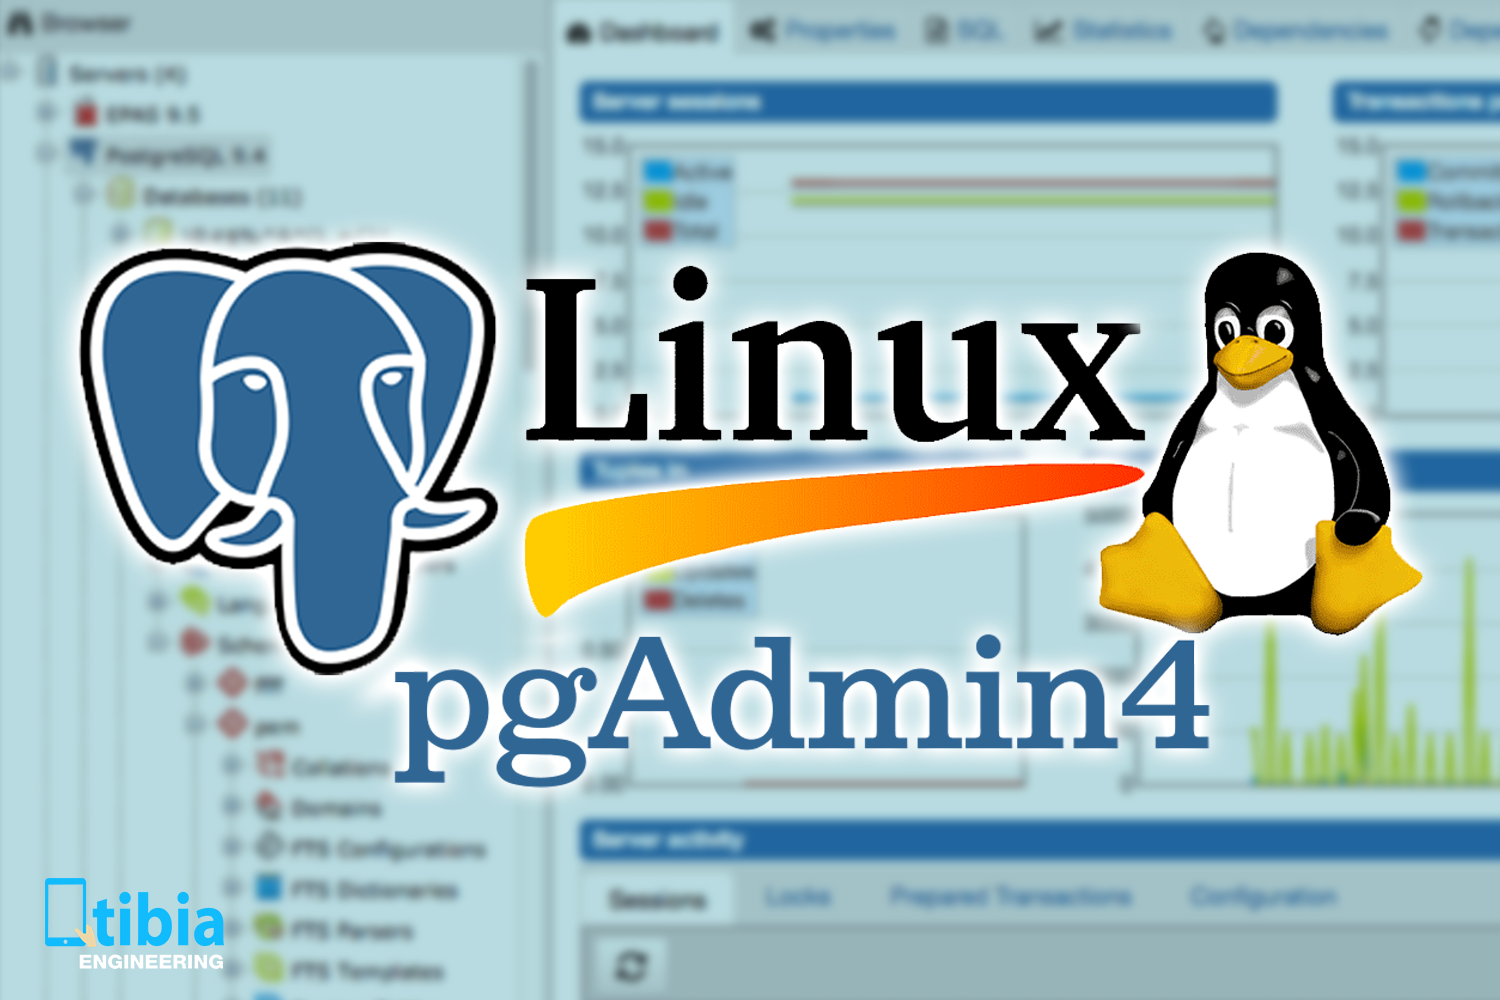 Install pgAdmin 4 as a service under linux